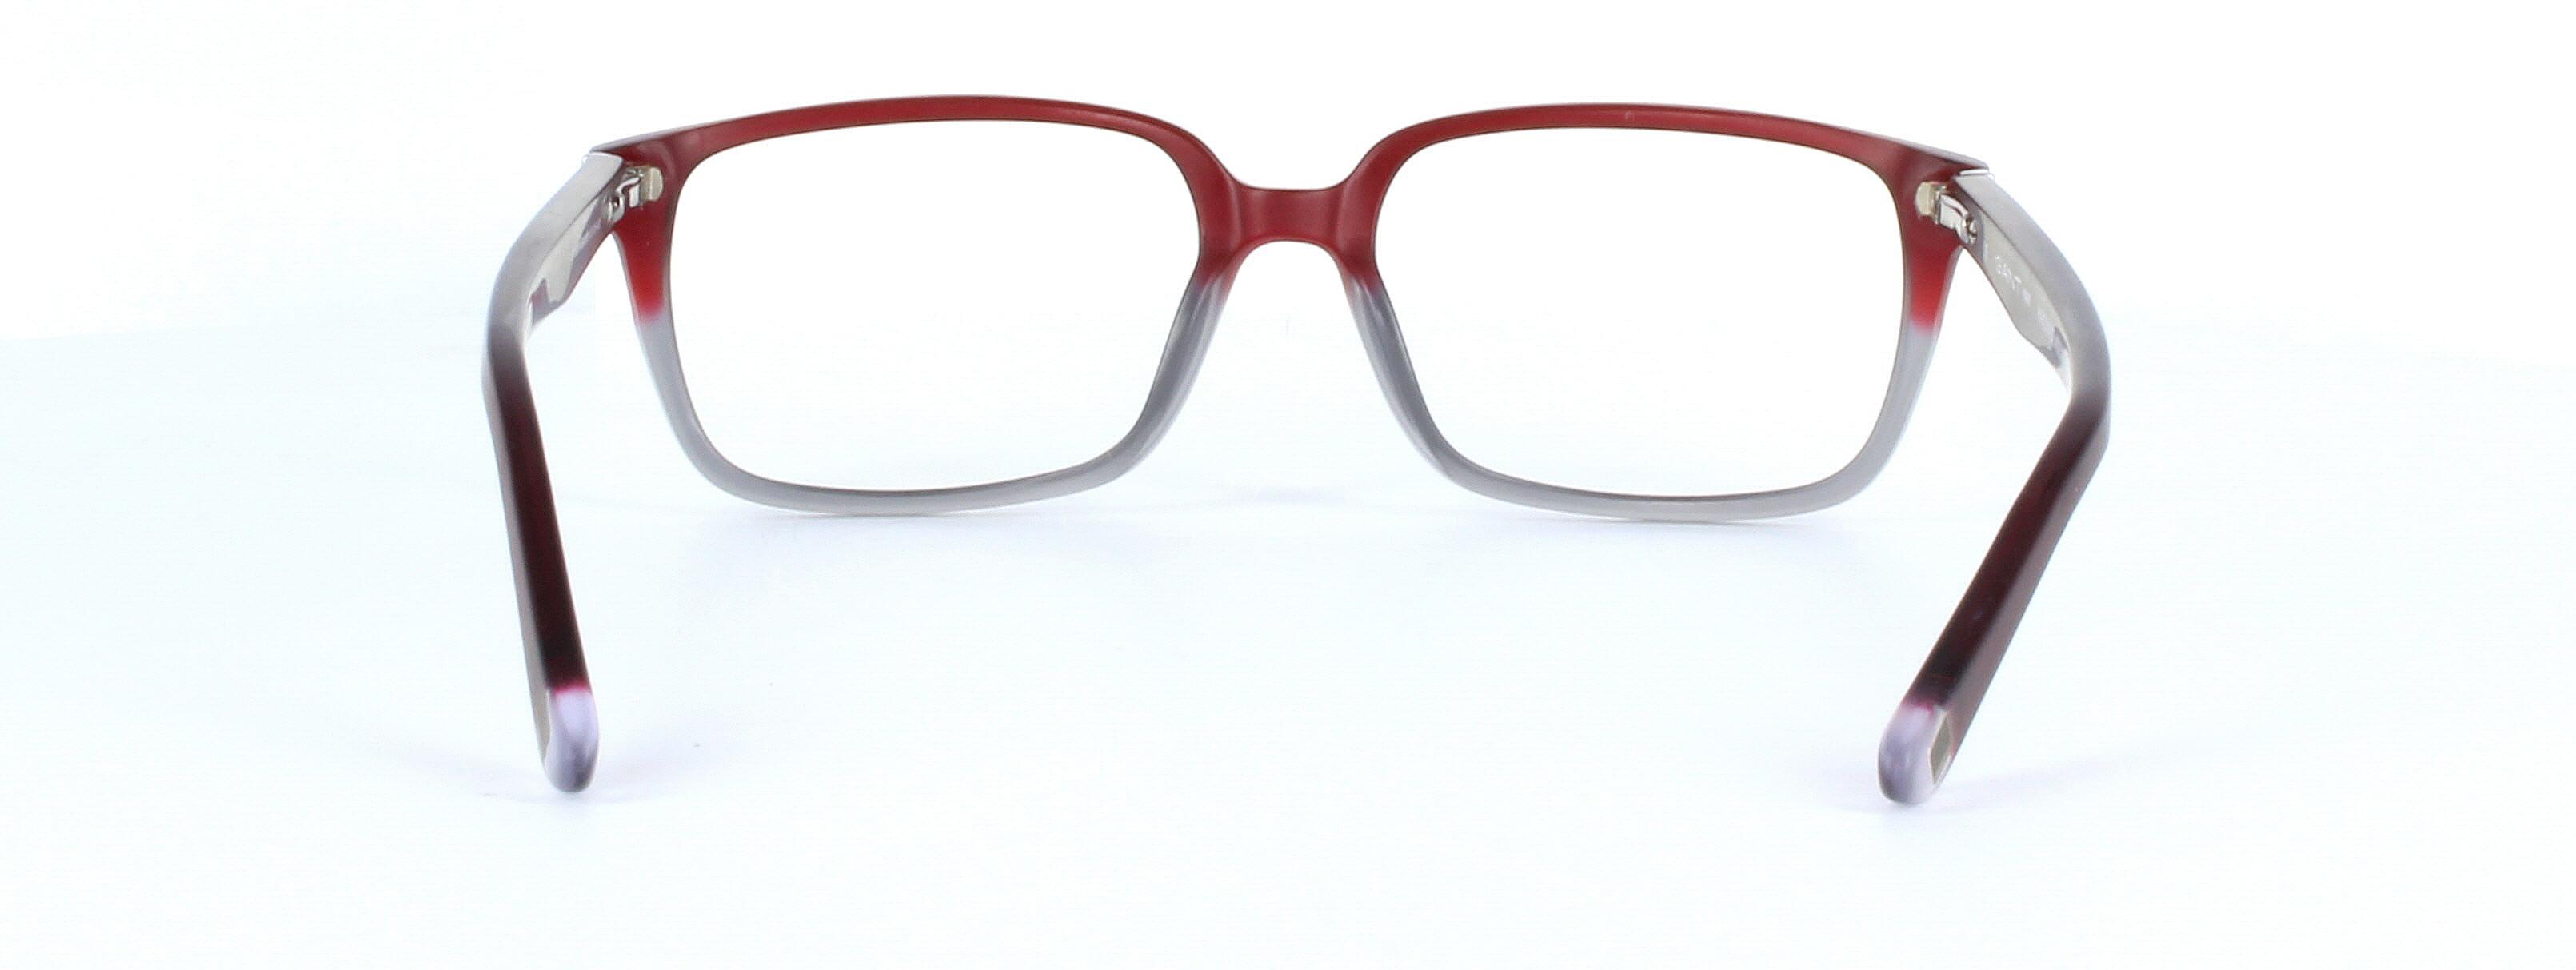 Gant 105 - Unisex 2-tone matt burgundy and grey acetate glasses - image view 5